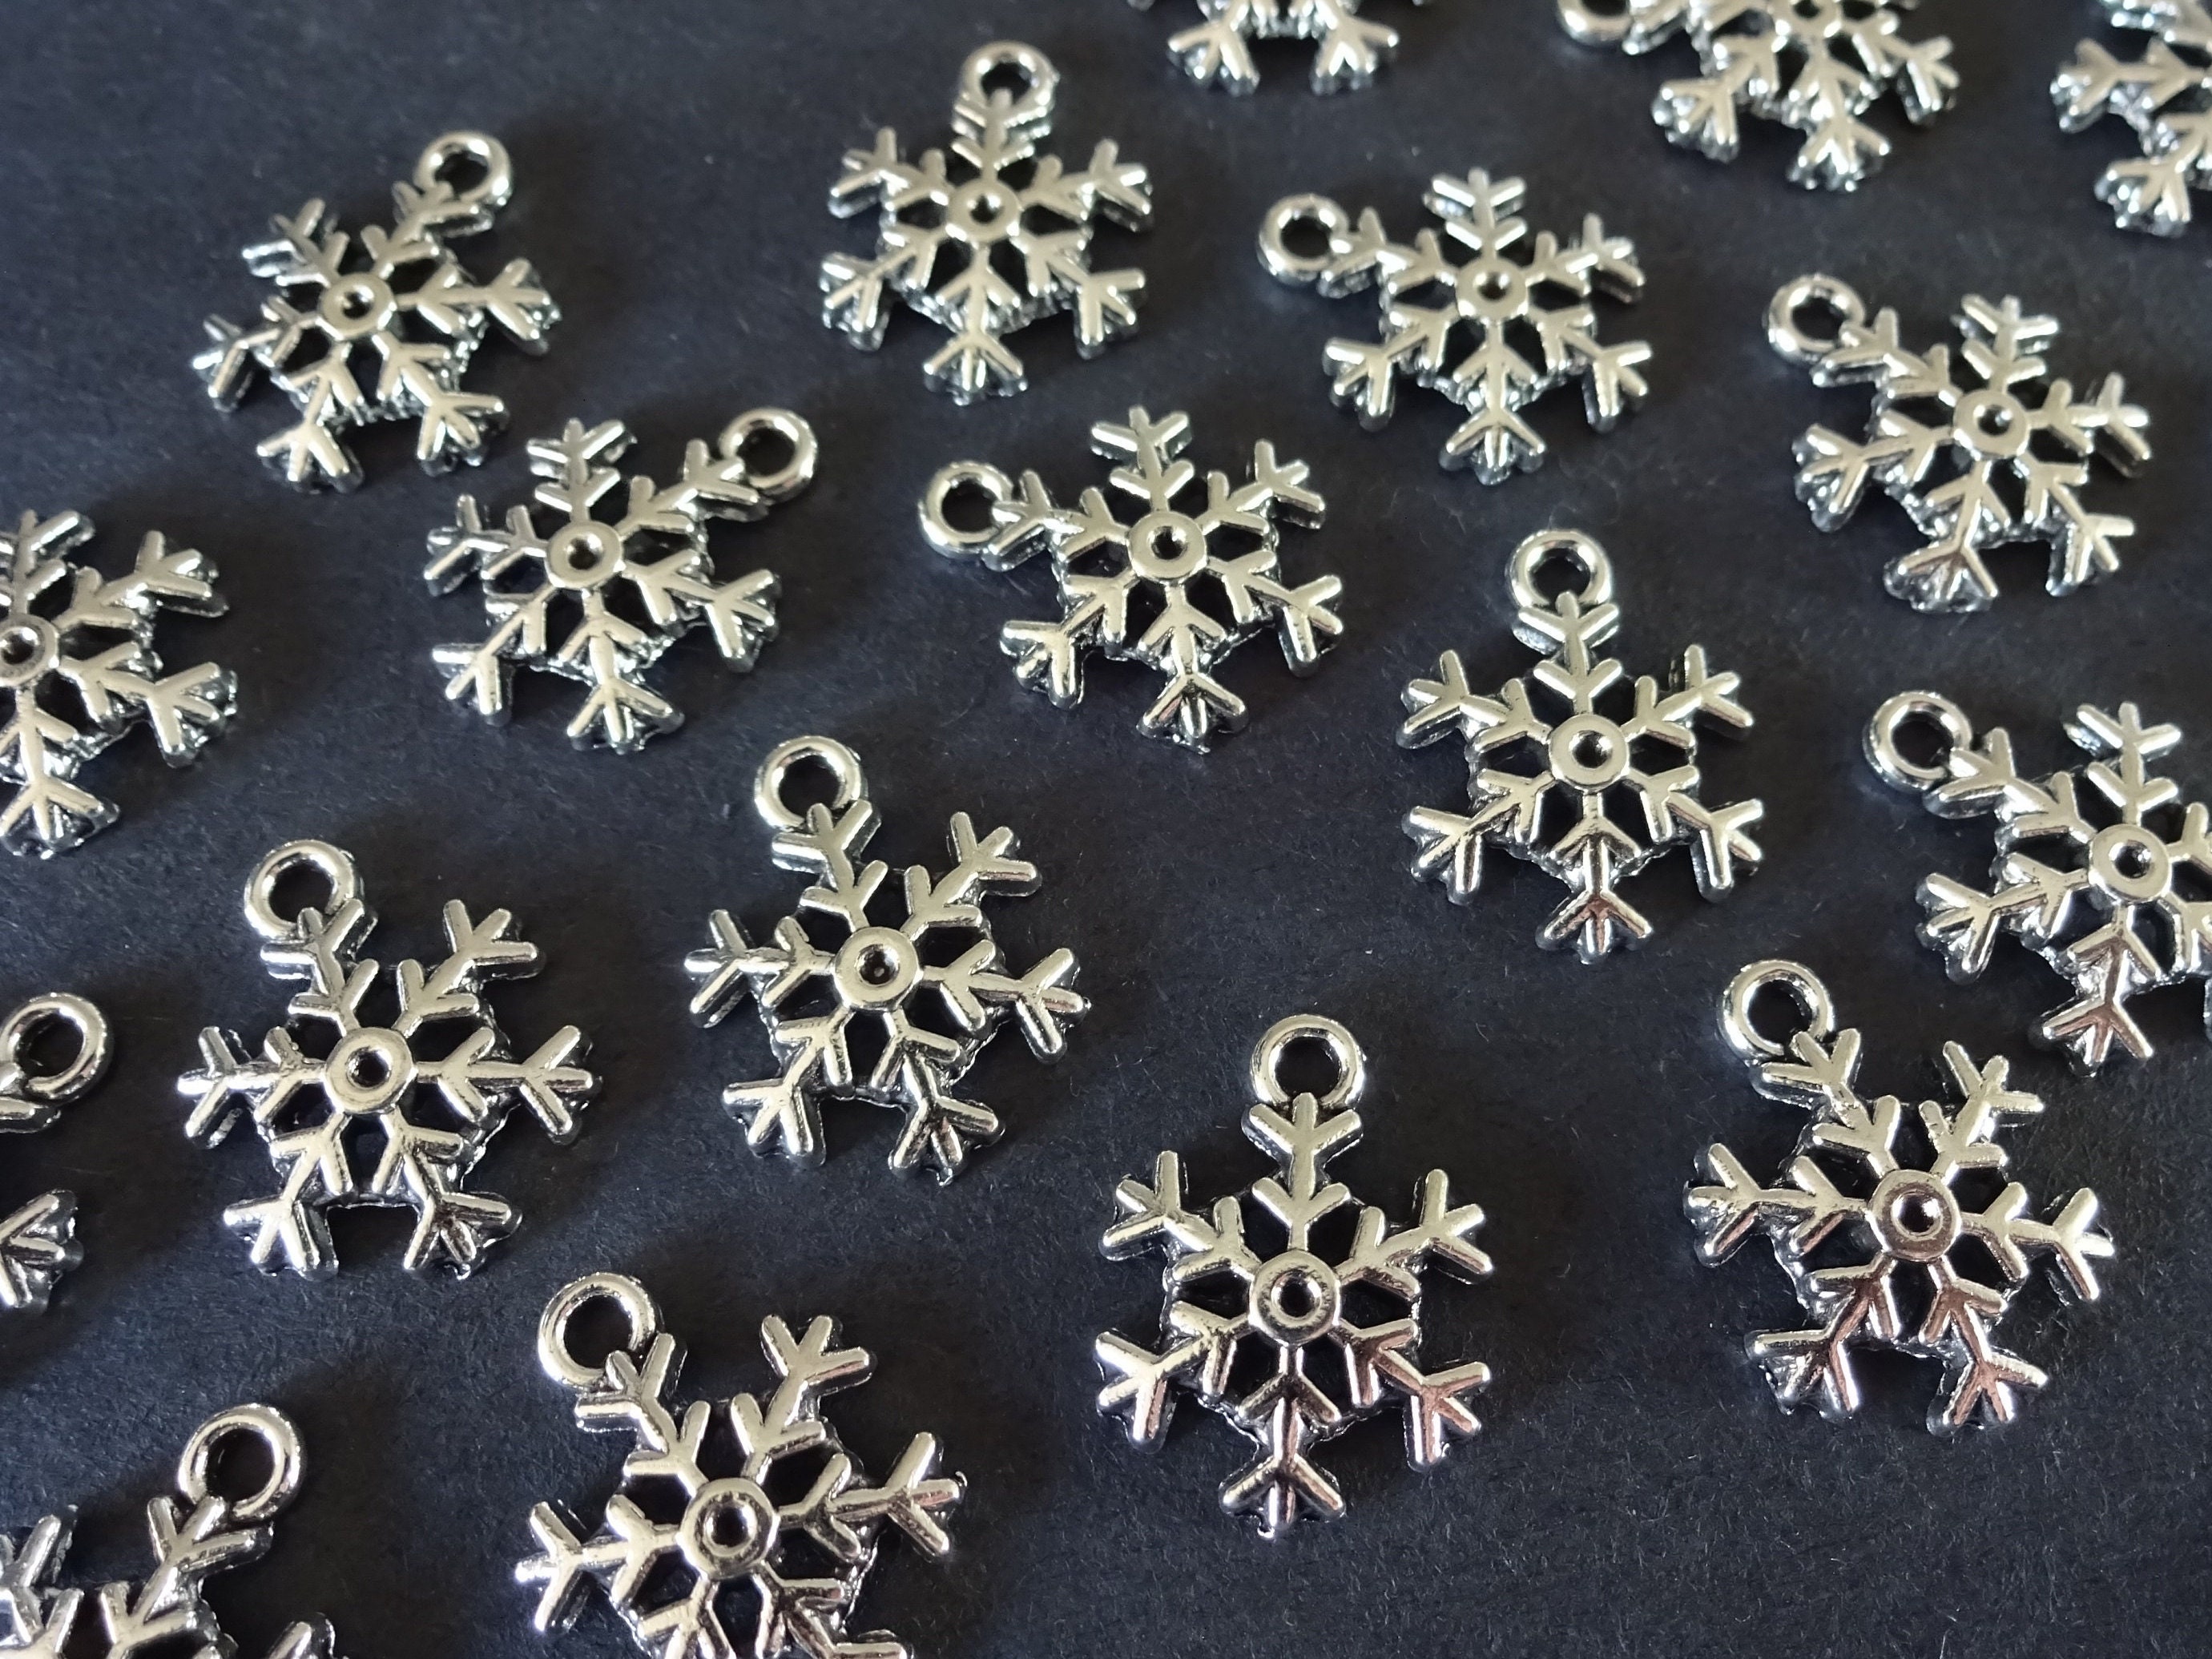 Broyhill Gold Metal Snowflake Decor